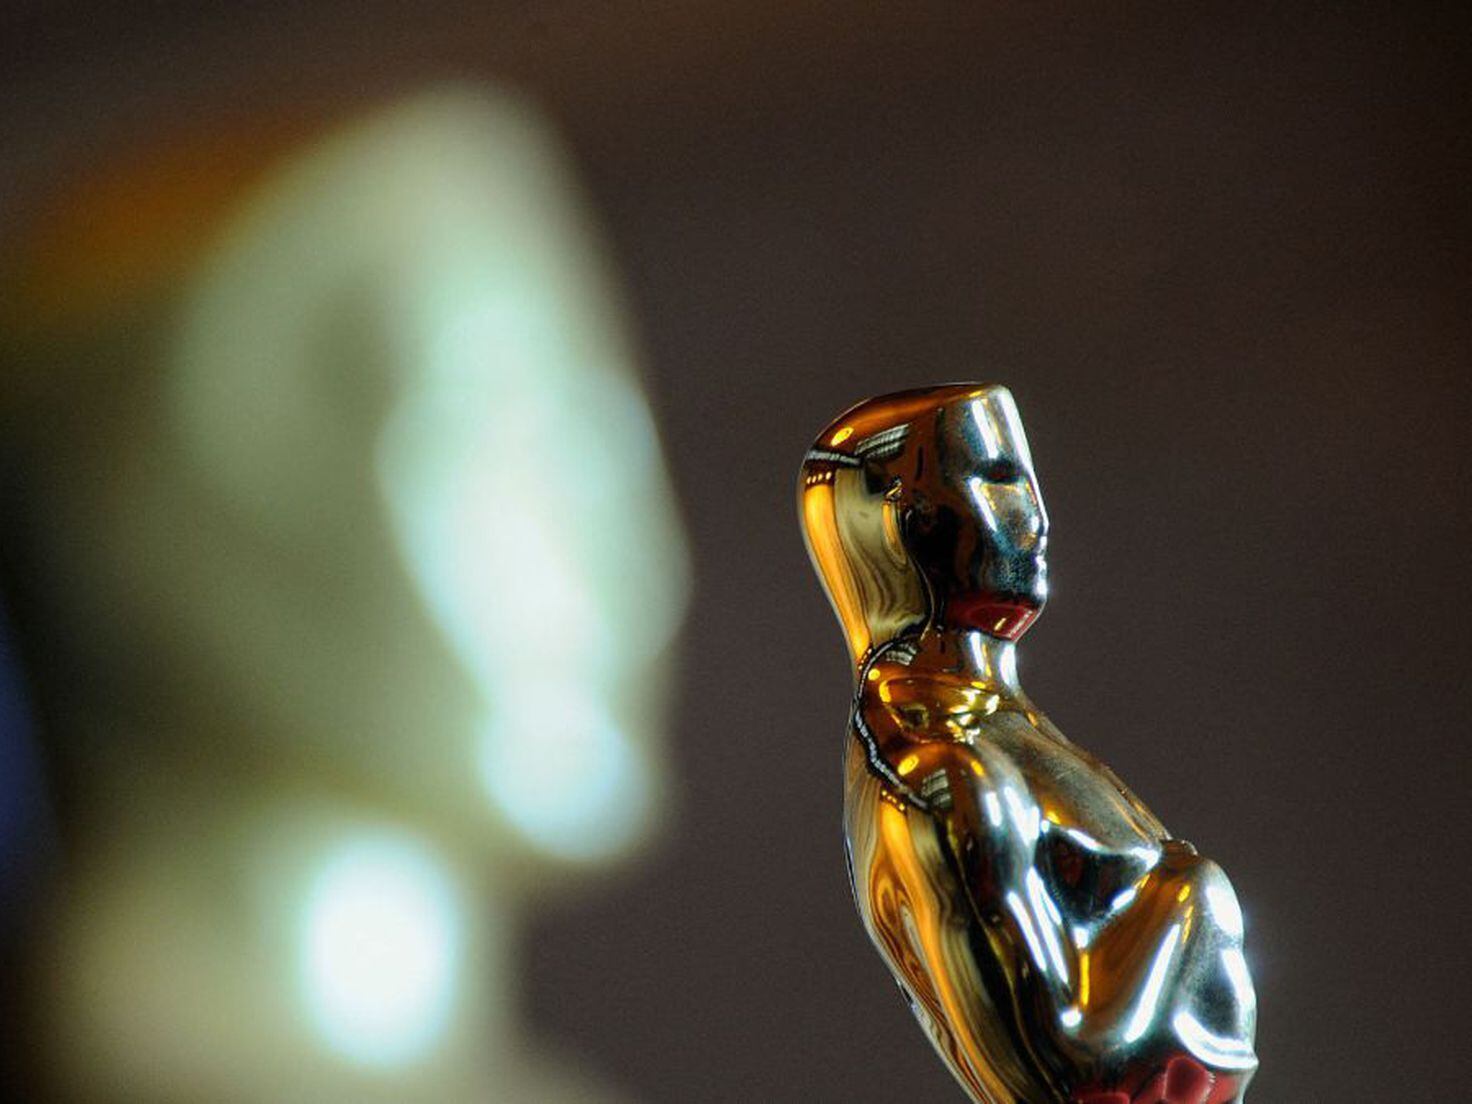 Oscar Hosts 2022: Wanda Sykes, Amy Schumer And Regina Hall Set – Deadline